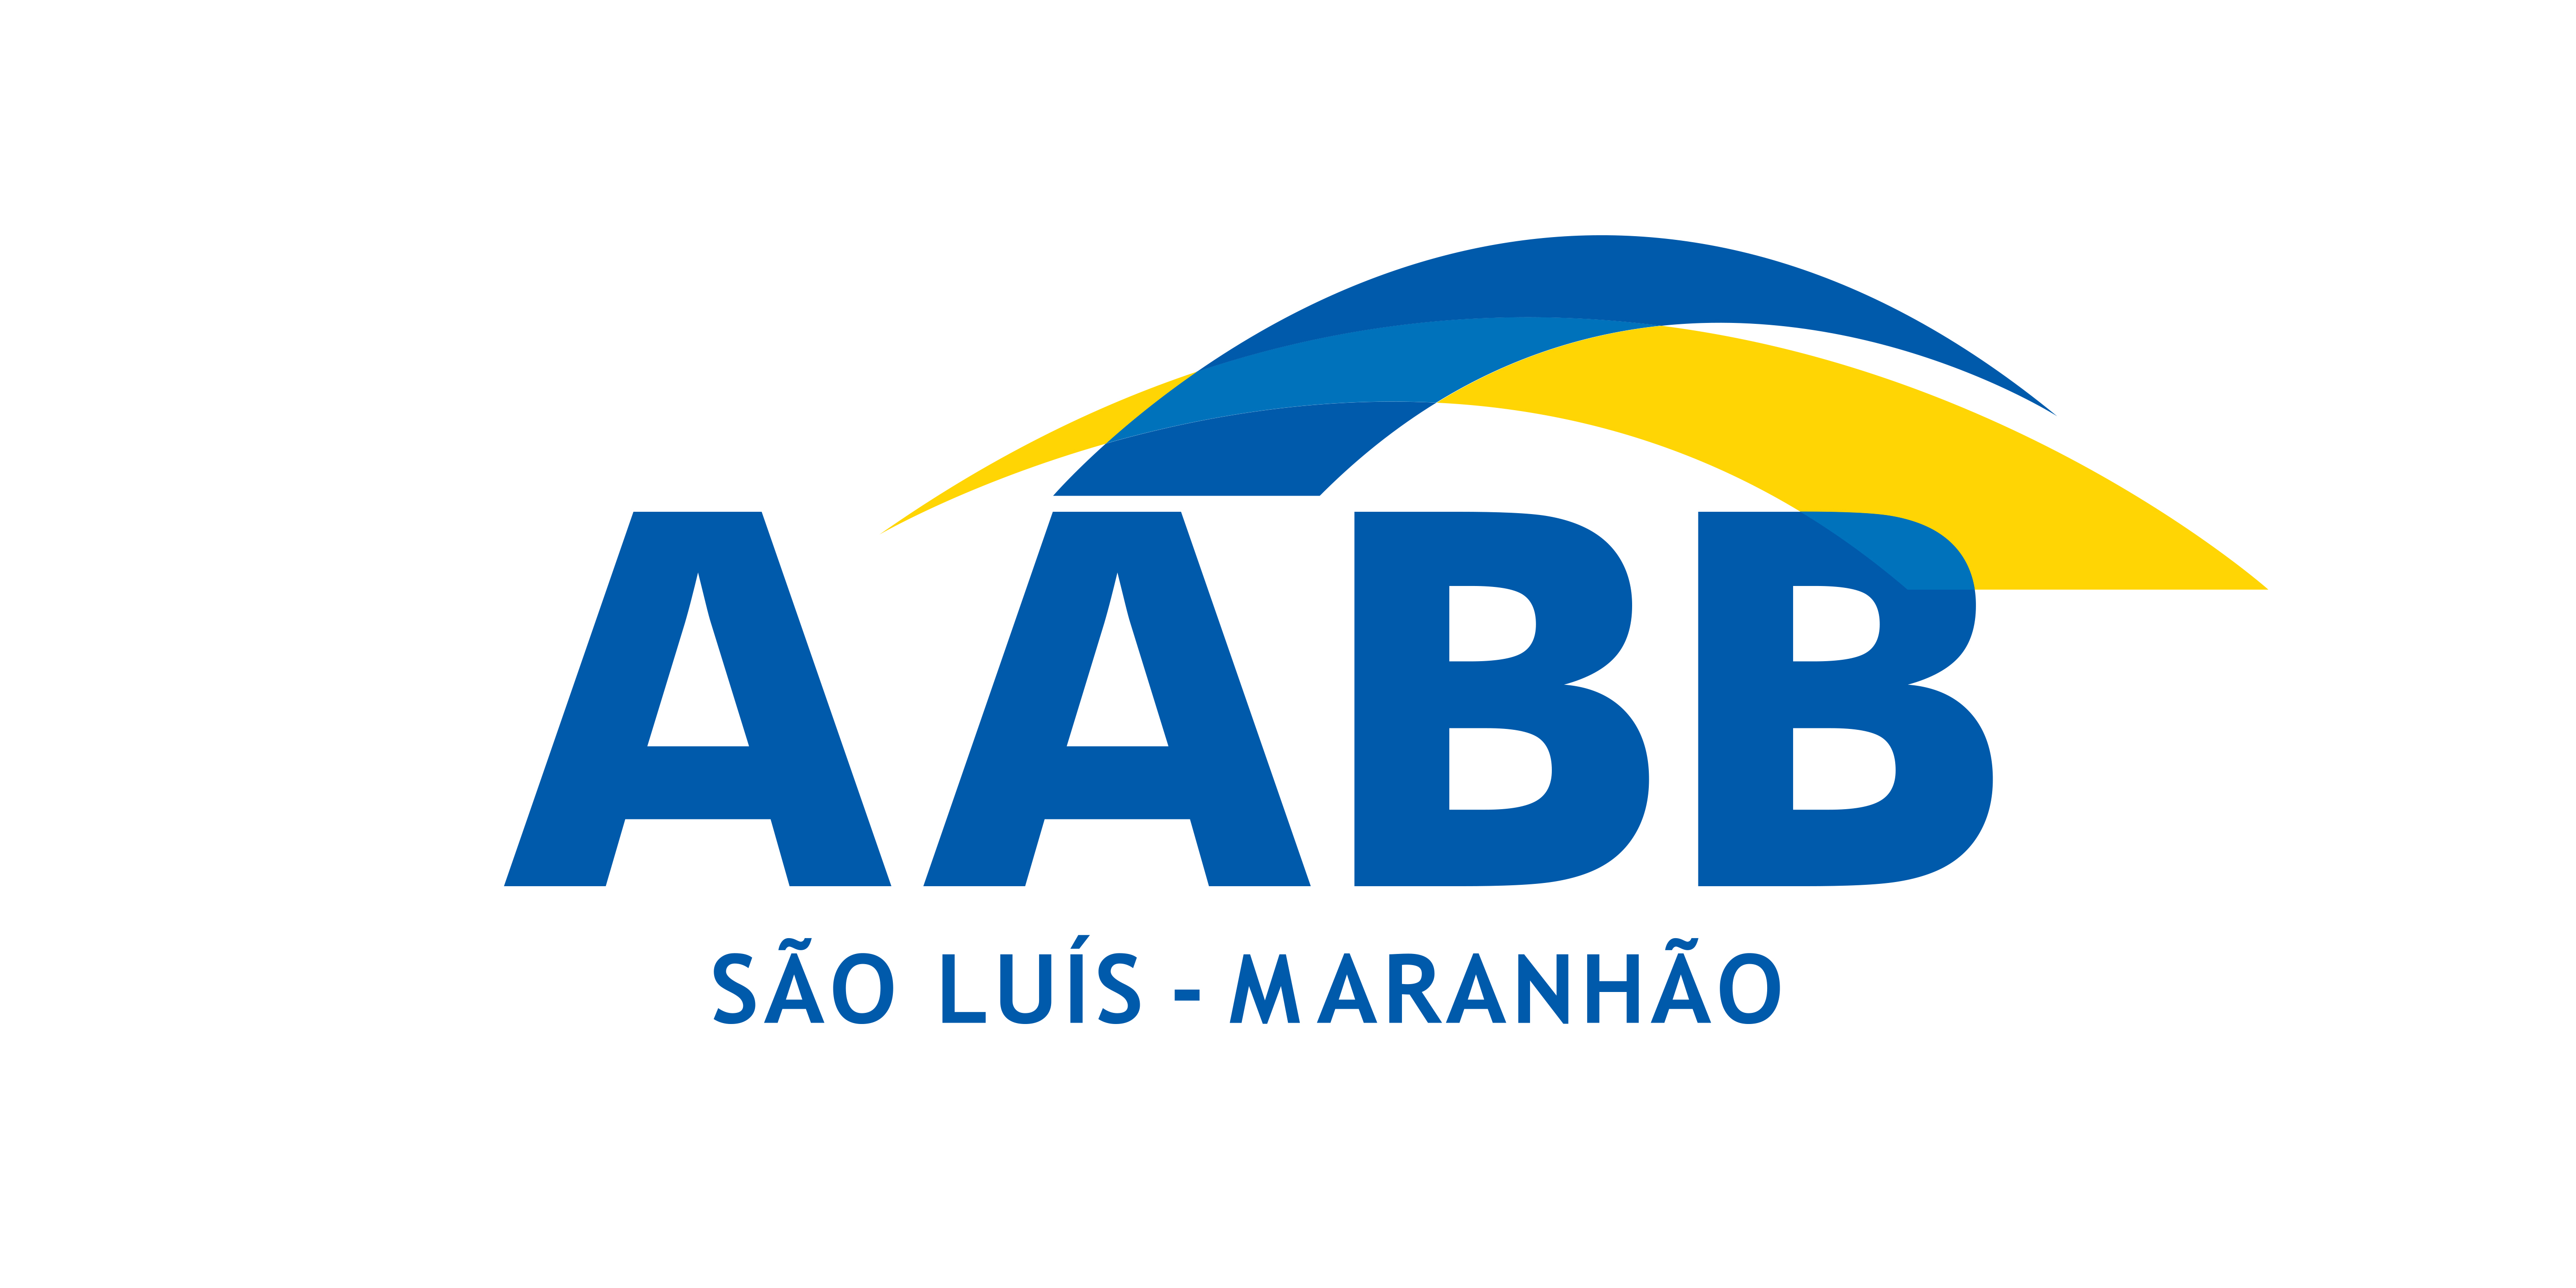 Calendário Dos Campeonatos 2018 - Aabb, Transparent background PNG HD thumbnail